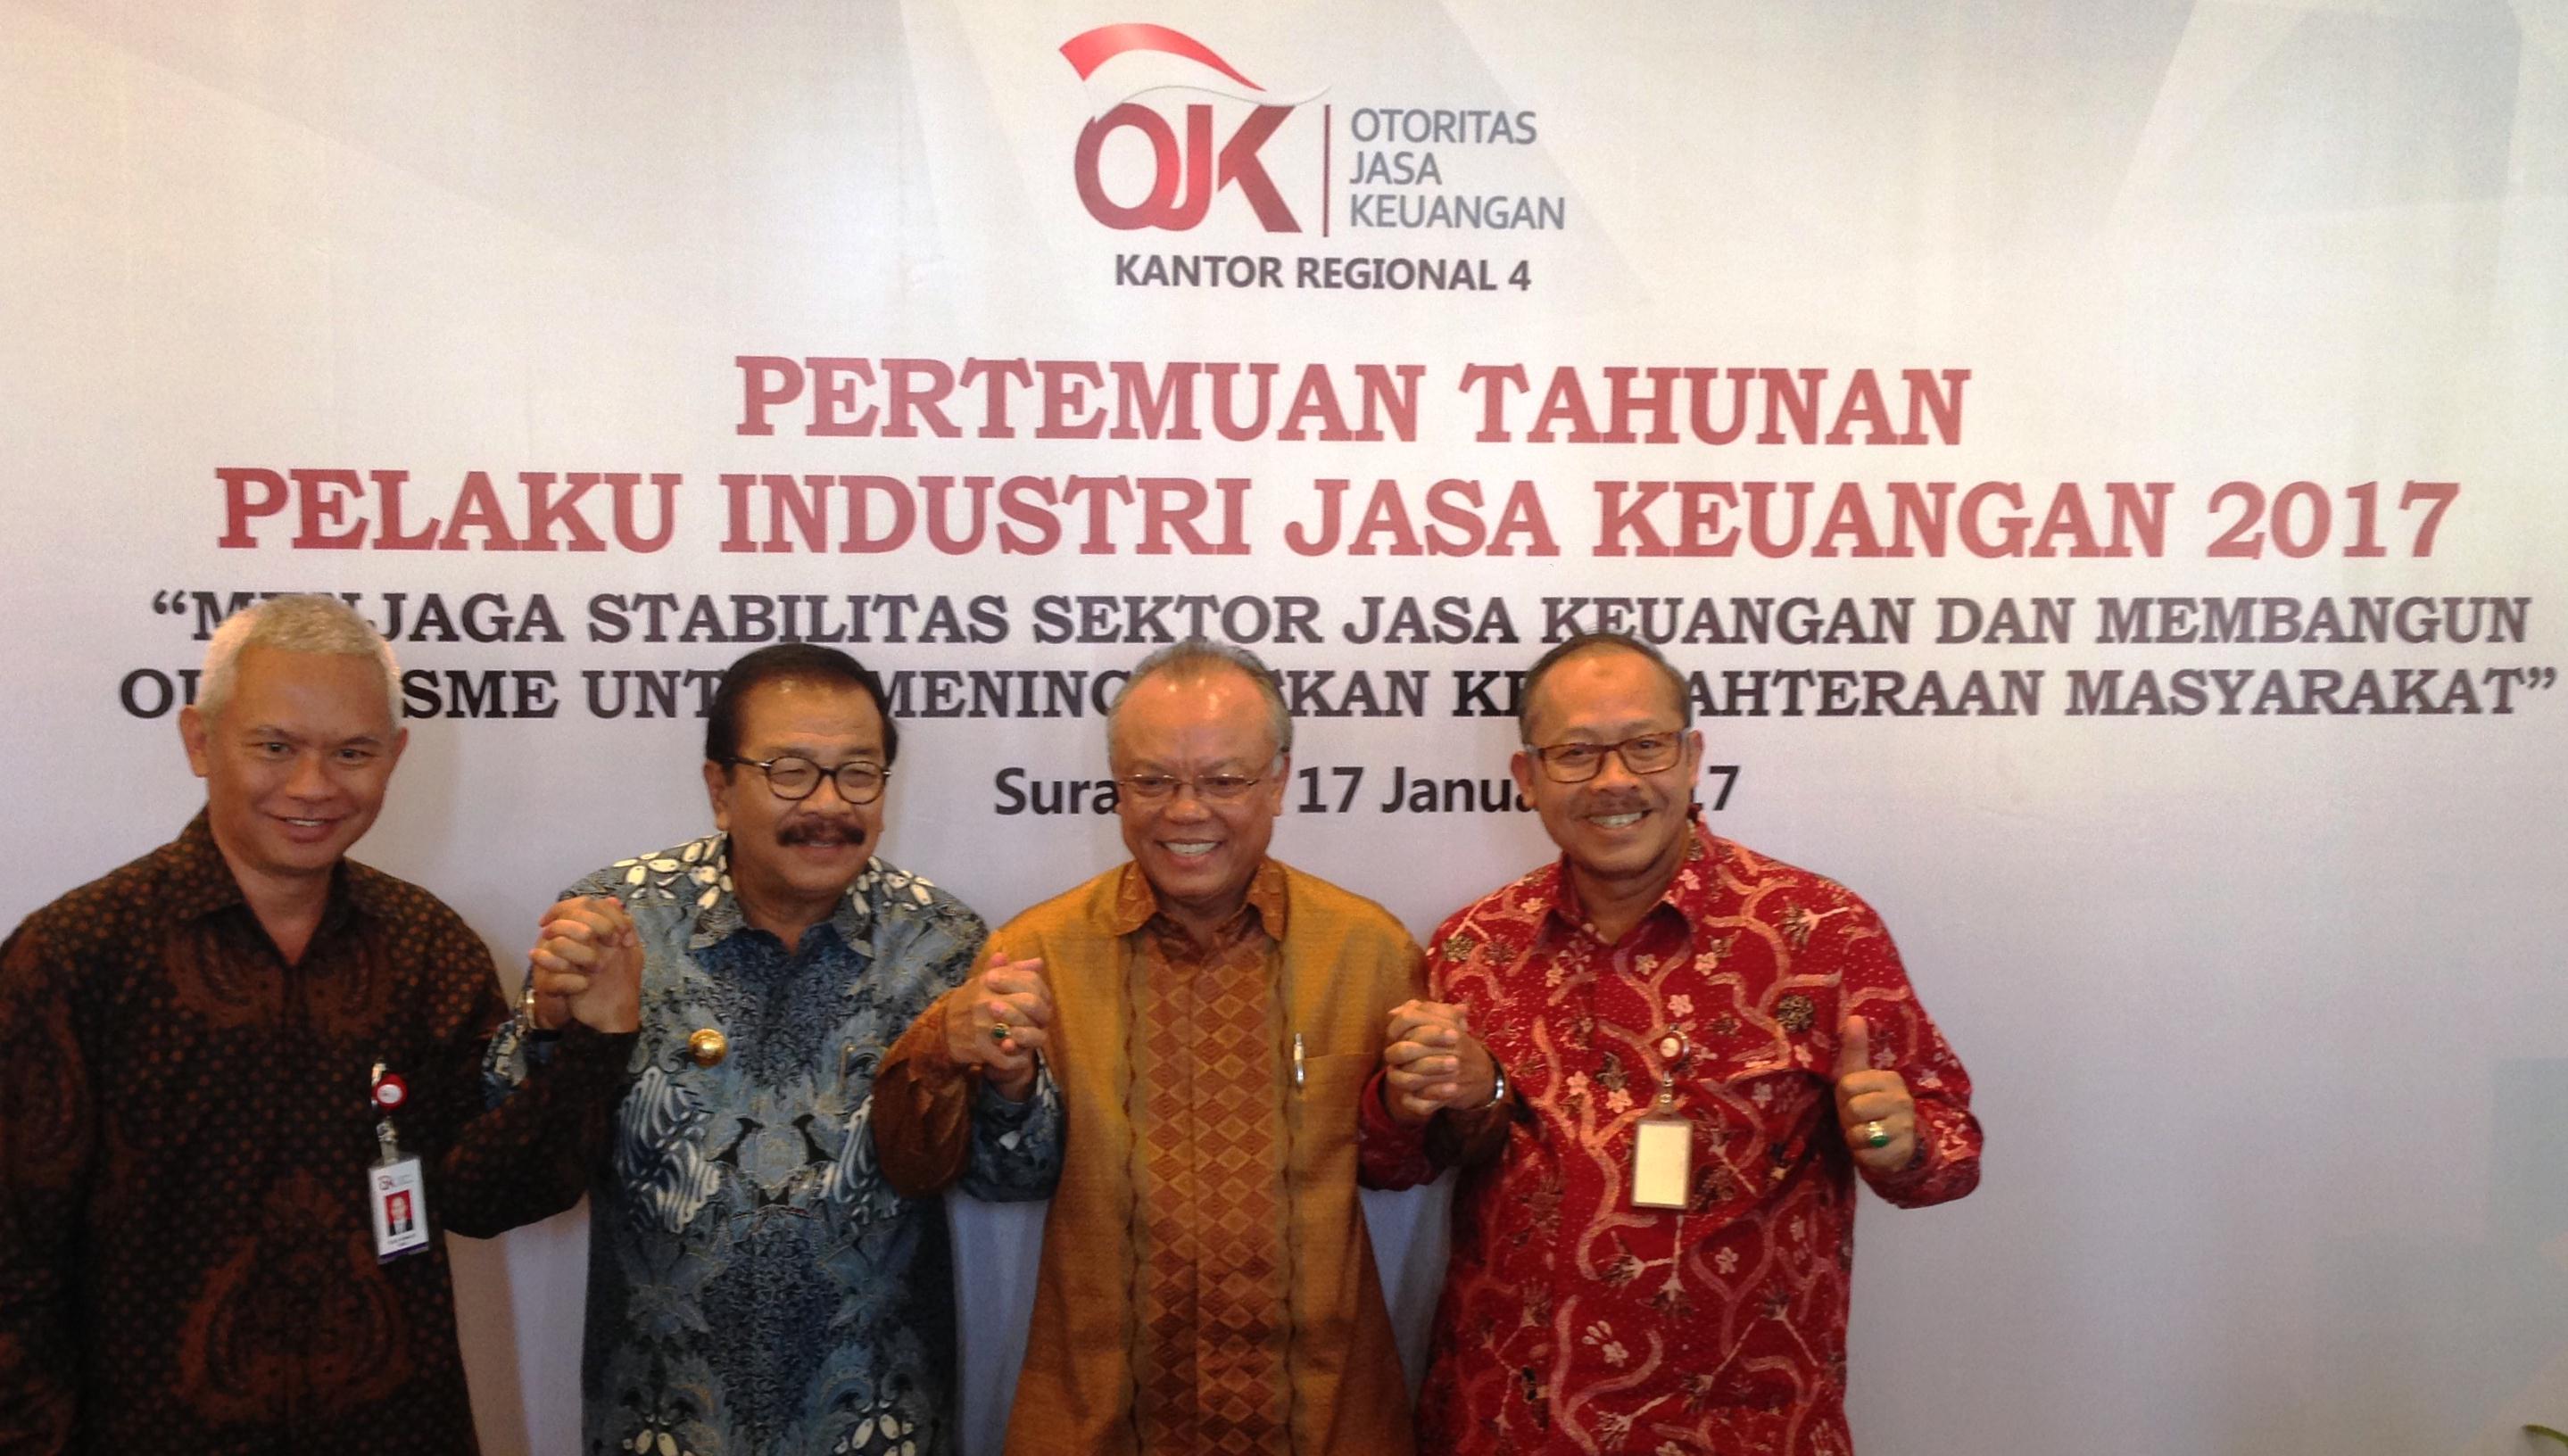 Gubernur Jatim Soekarwo didampingi  Kepala #Eksekutif Pengawas Perbankan OJK dan Kepala OJK Kantor Regional IV Jatim Sukamto dalam pertemuan tahunan pelaku insdustri jasa keuangan di Surabaya.